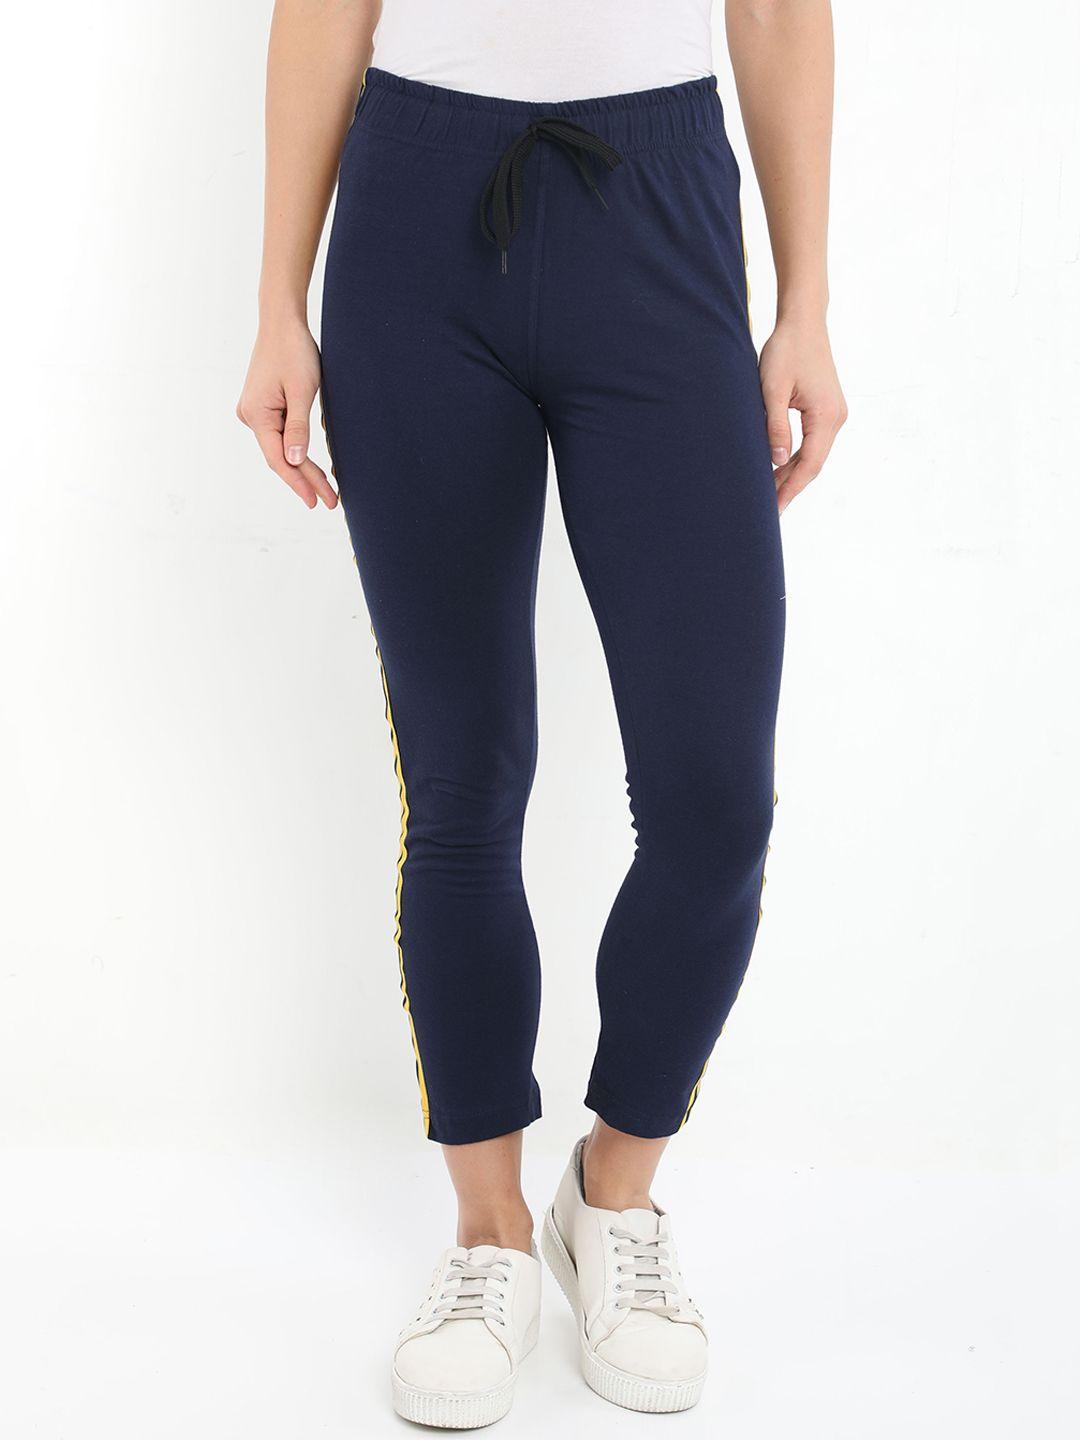 fleximaa women navy blue solid slim fit track pants